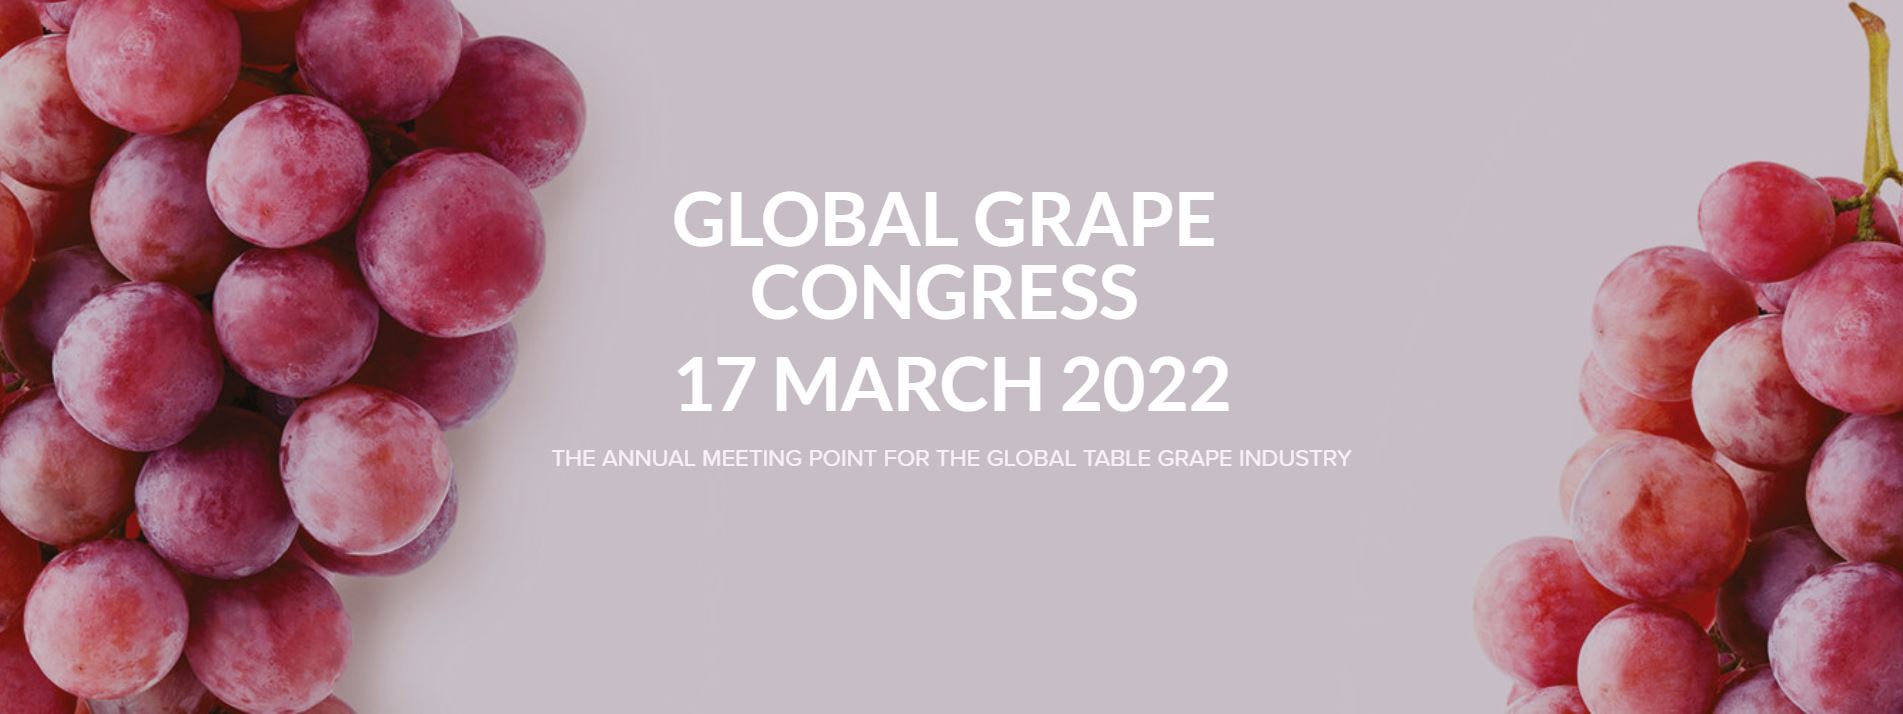 Tokba Trading - Return The Global Grape Congress 2022 Again